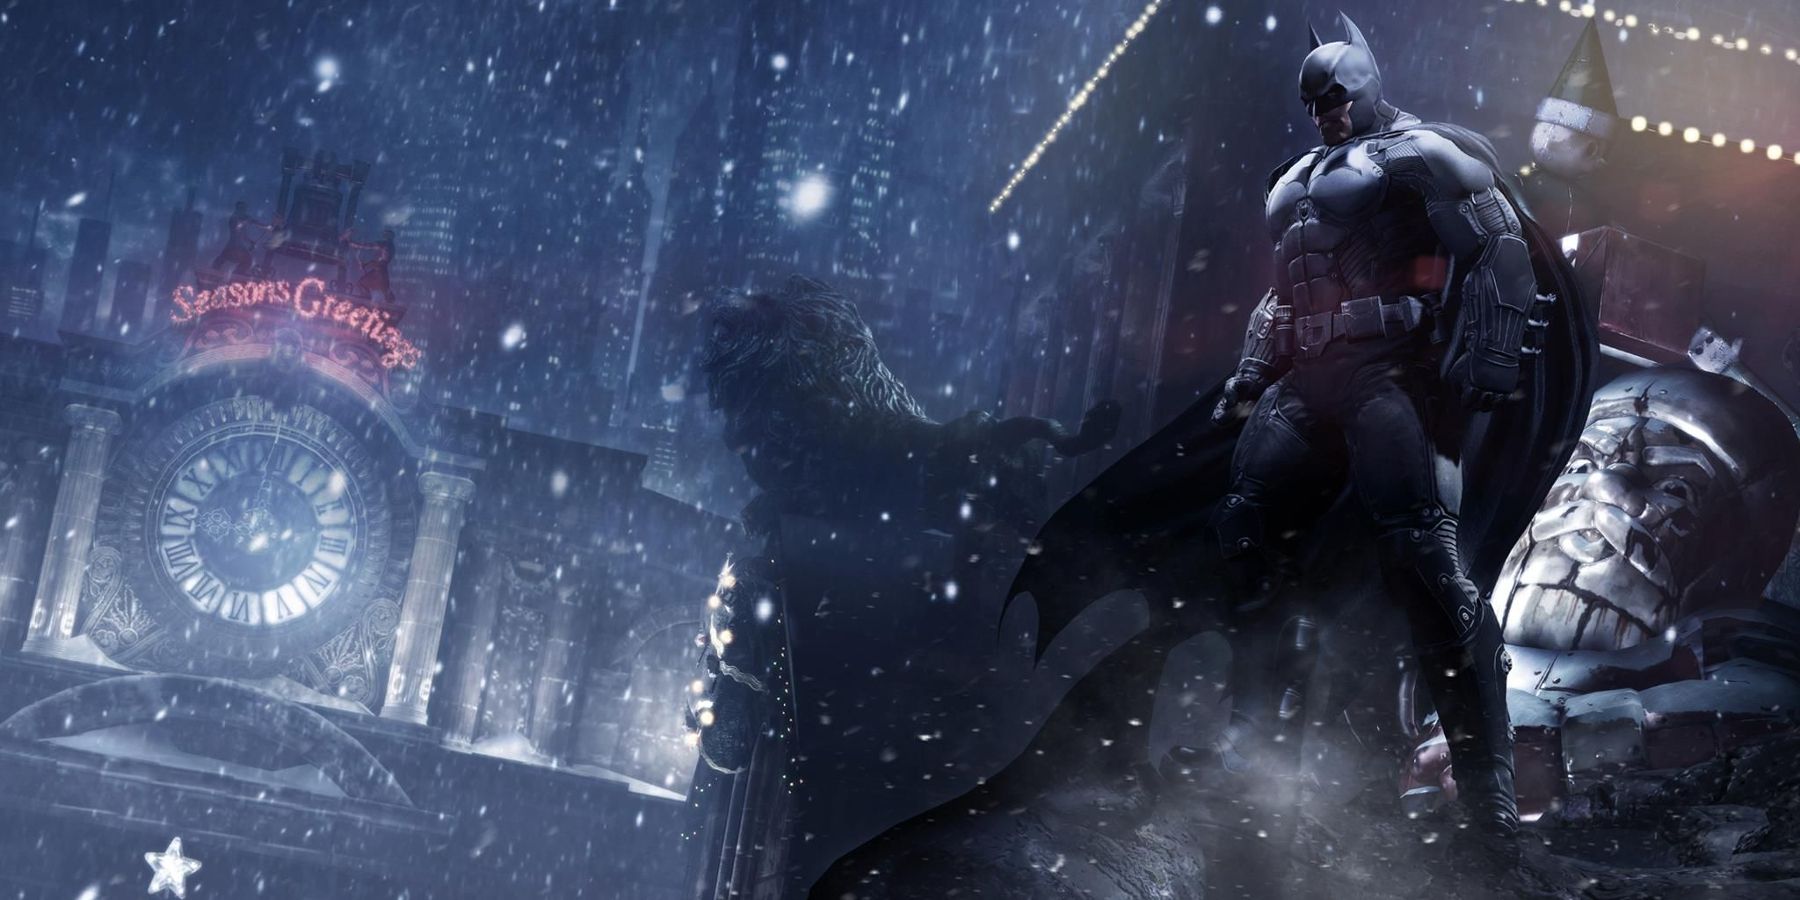 Batman brooding over Jezebel Plaza in Batman Arkham Origins